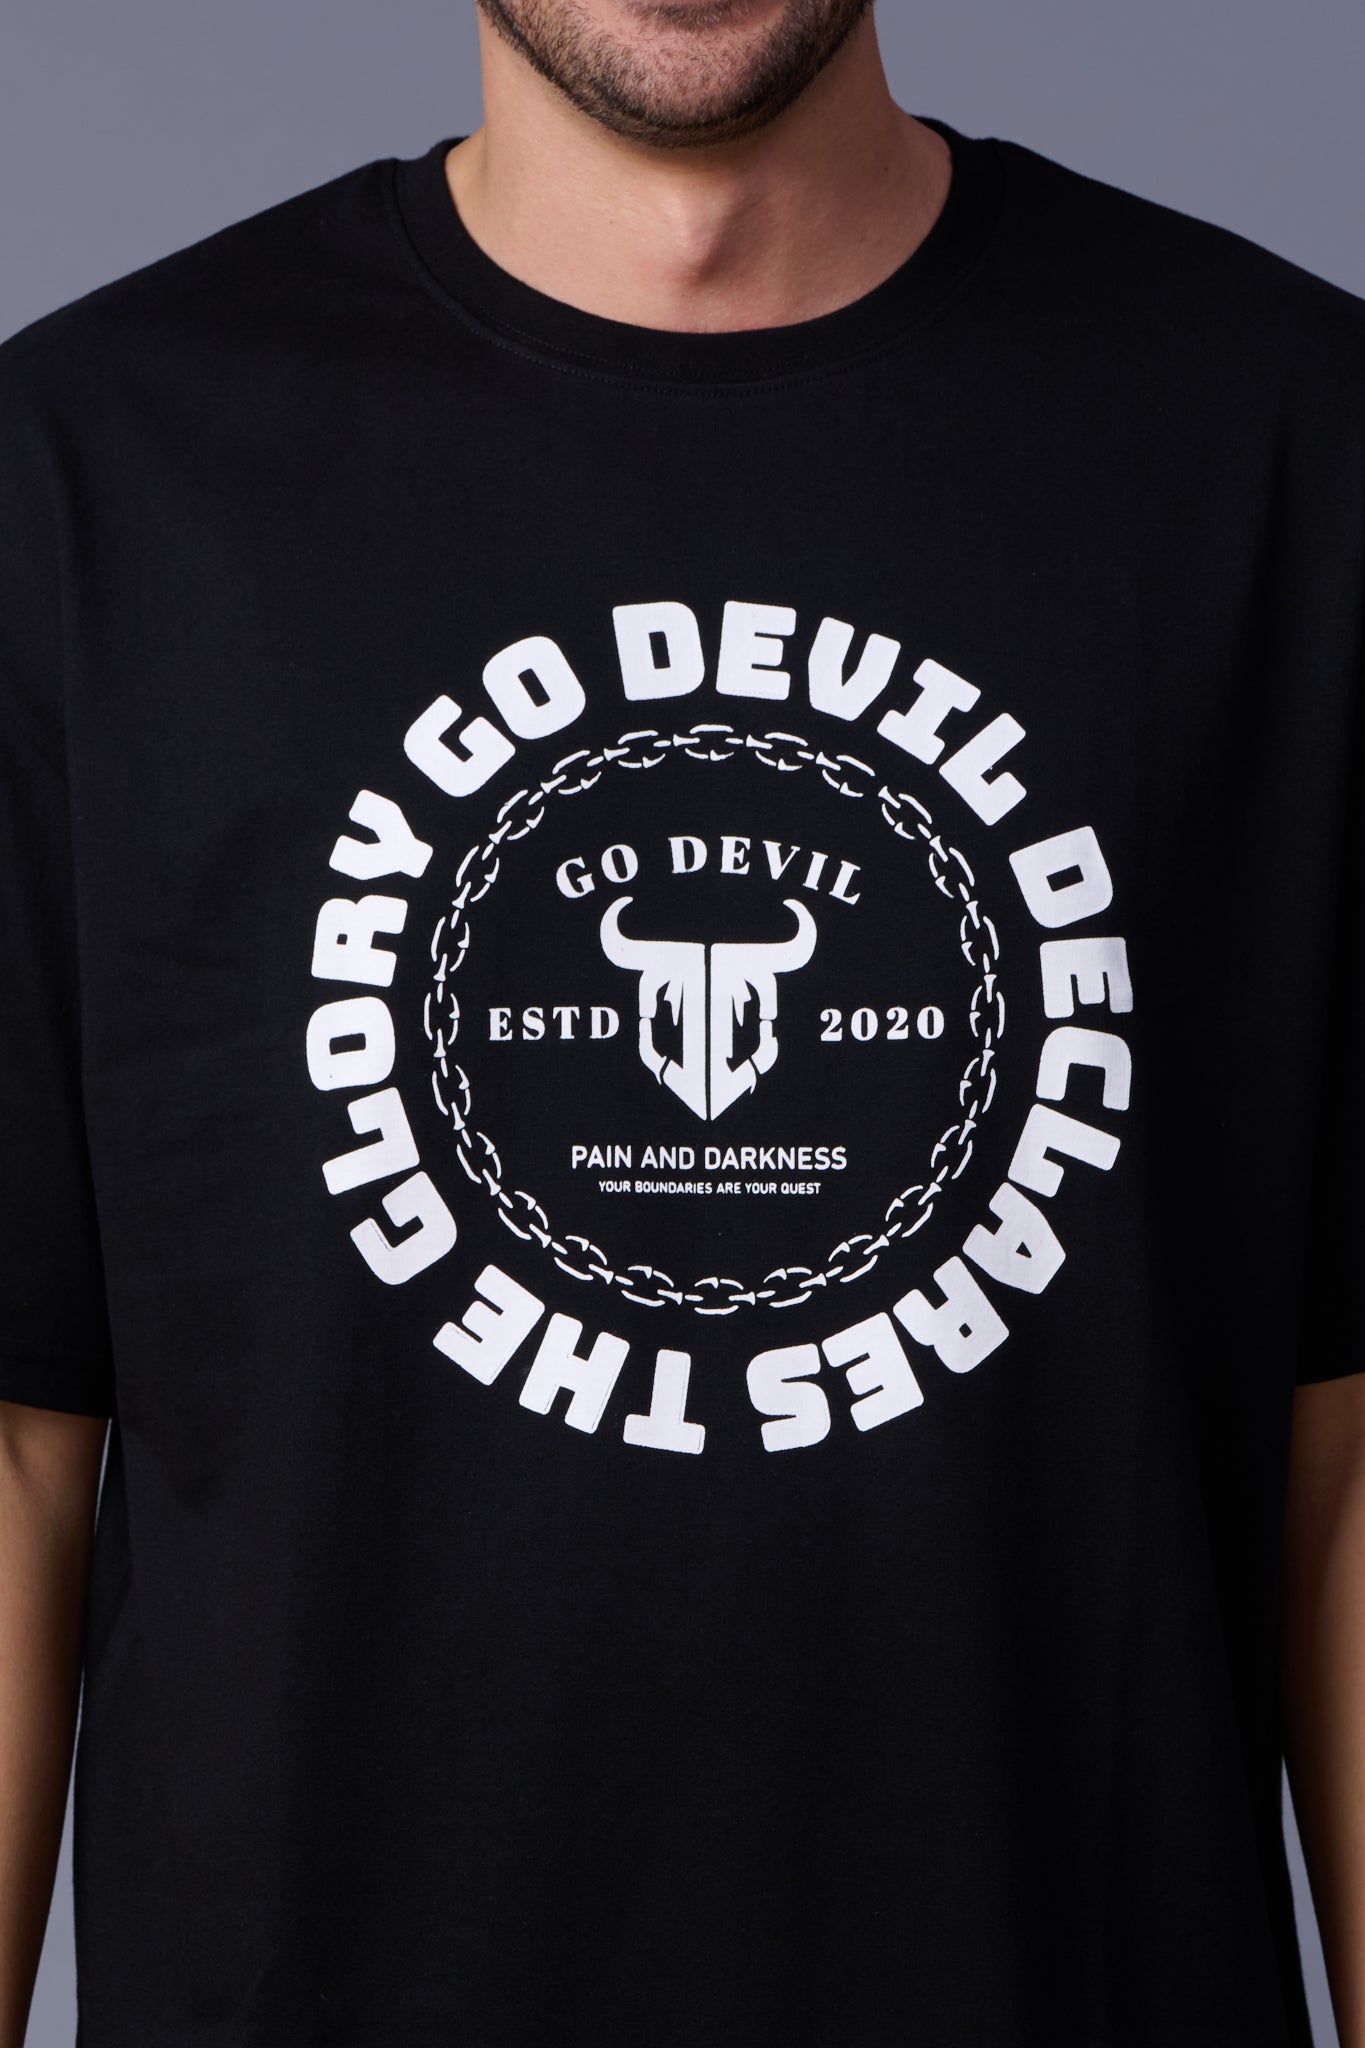 The Glory Go Devil Declares Printed Black Oversized T-Shirt for Men